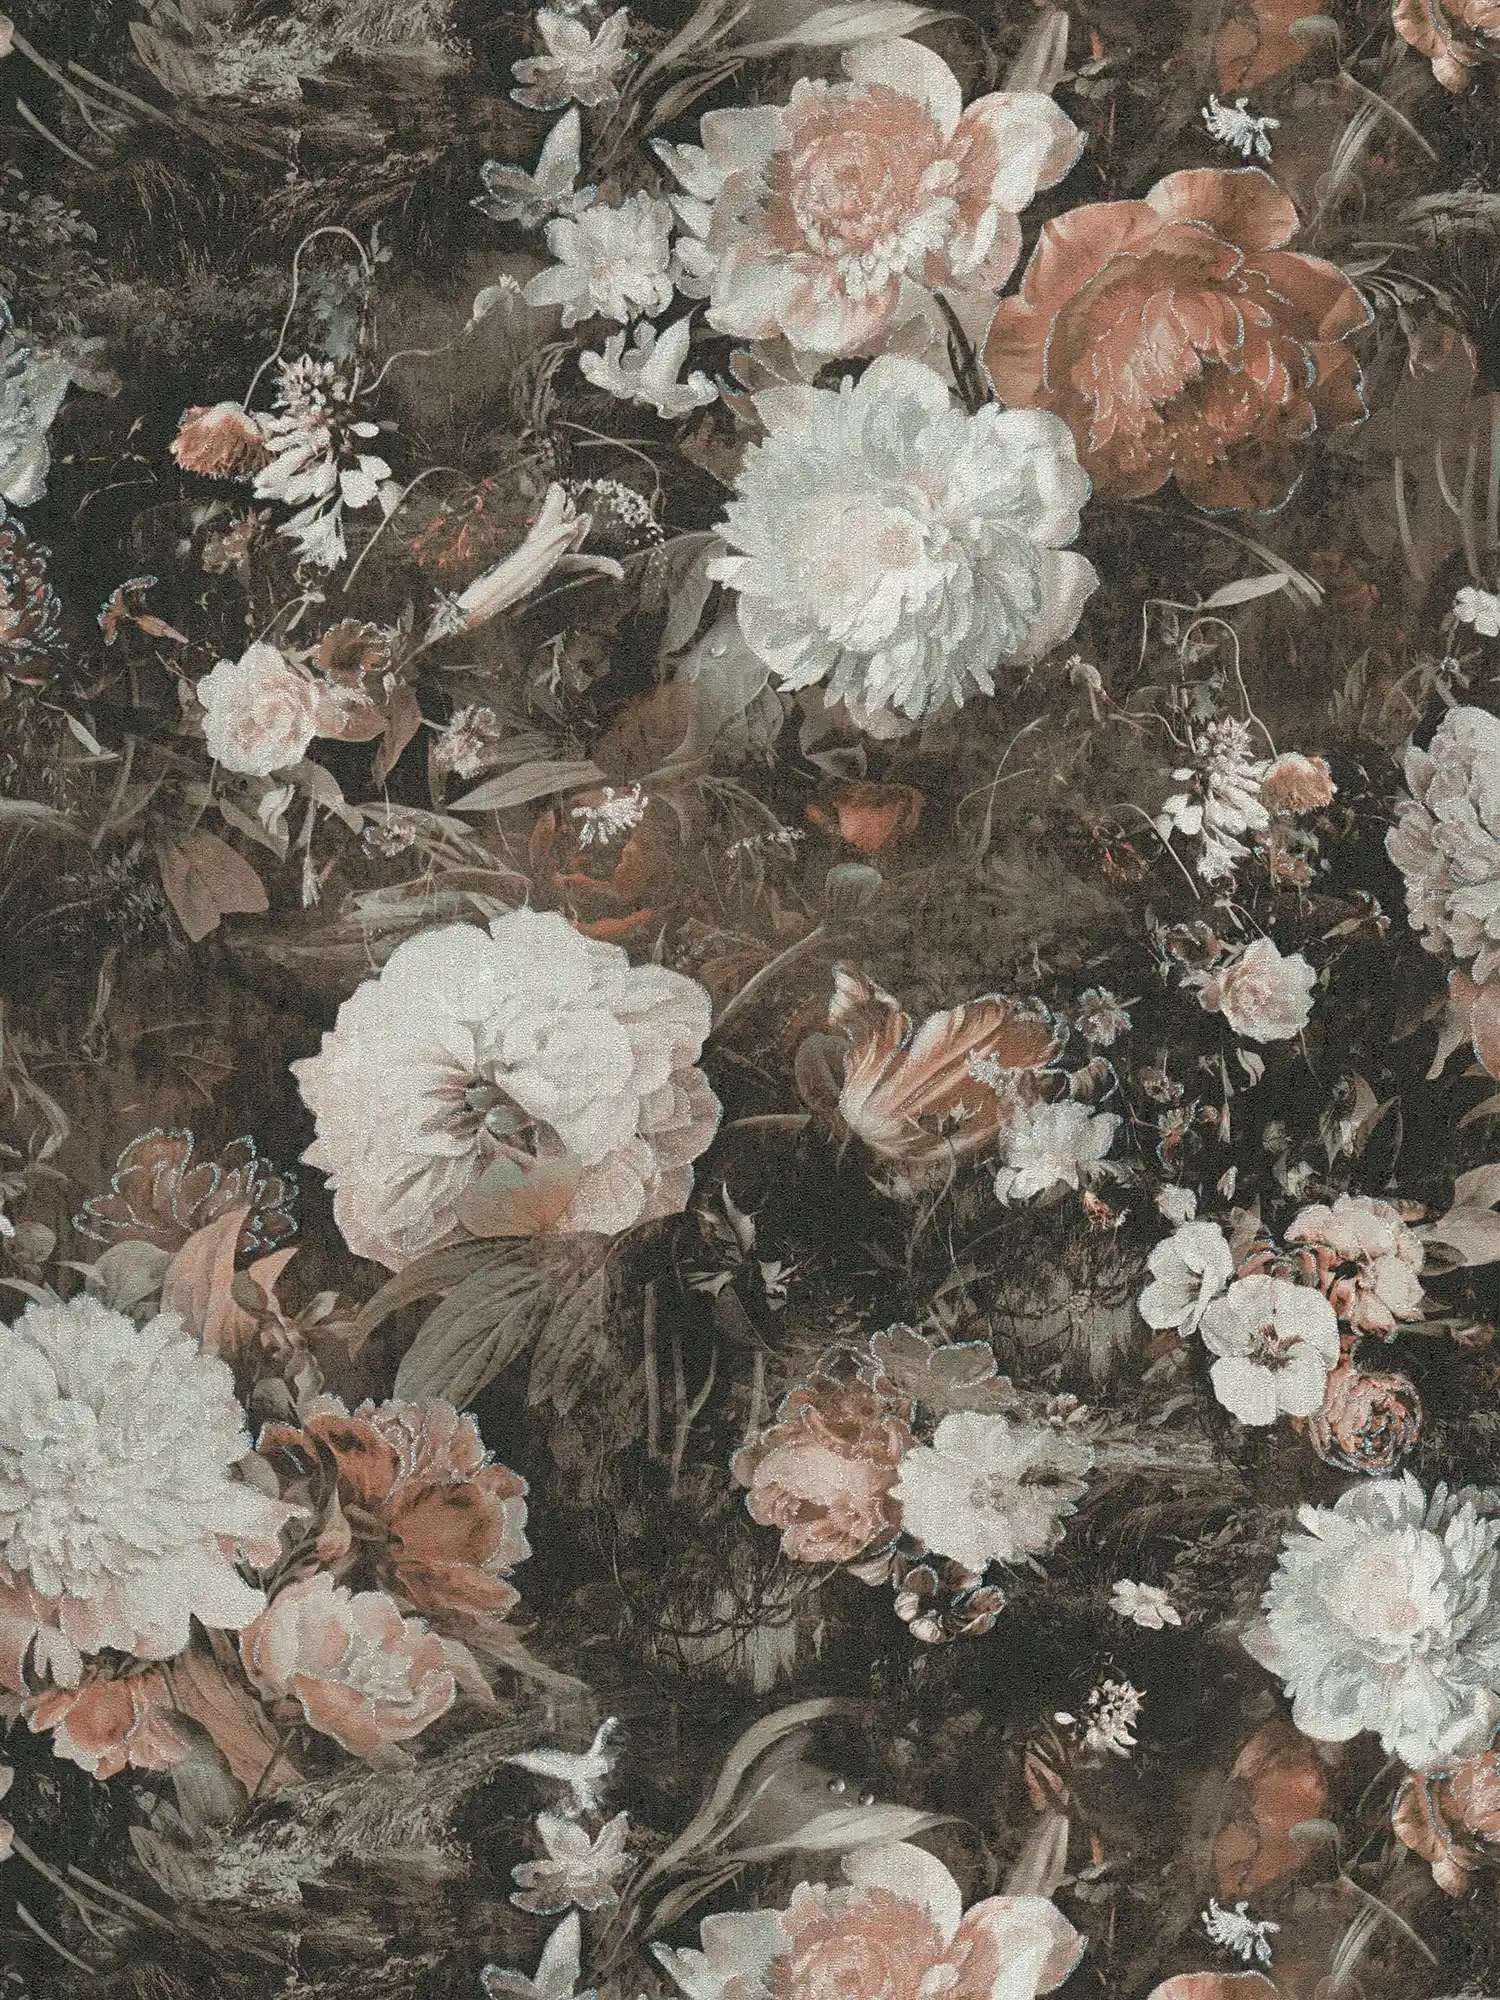 Vintage floral wallpaper classic rose pattern - cream, brown
